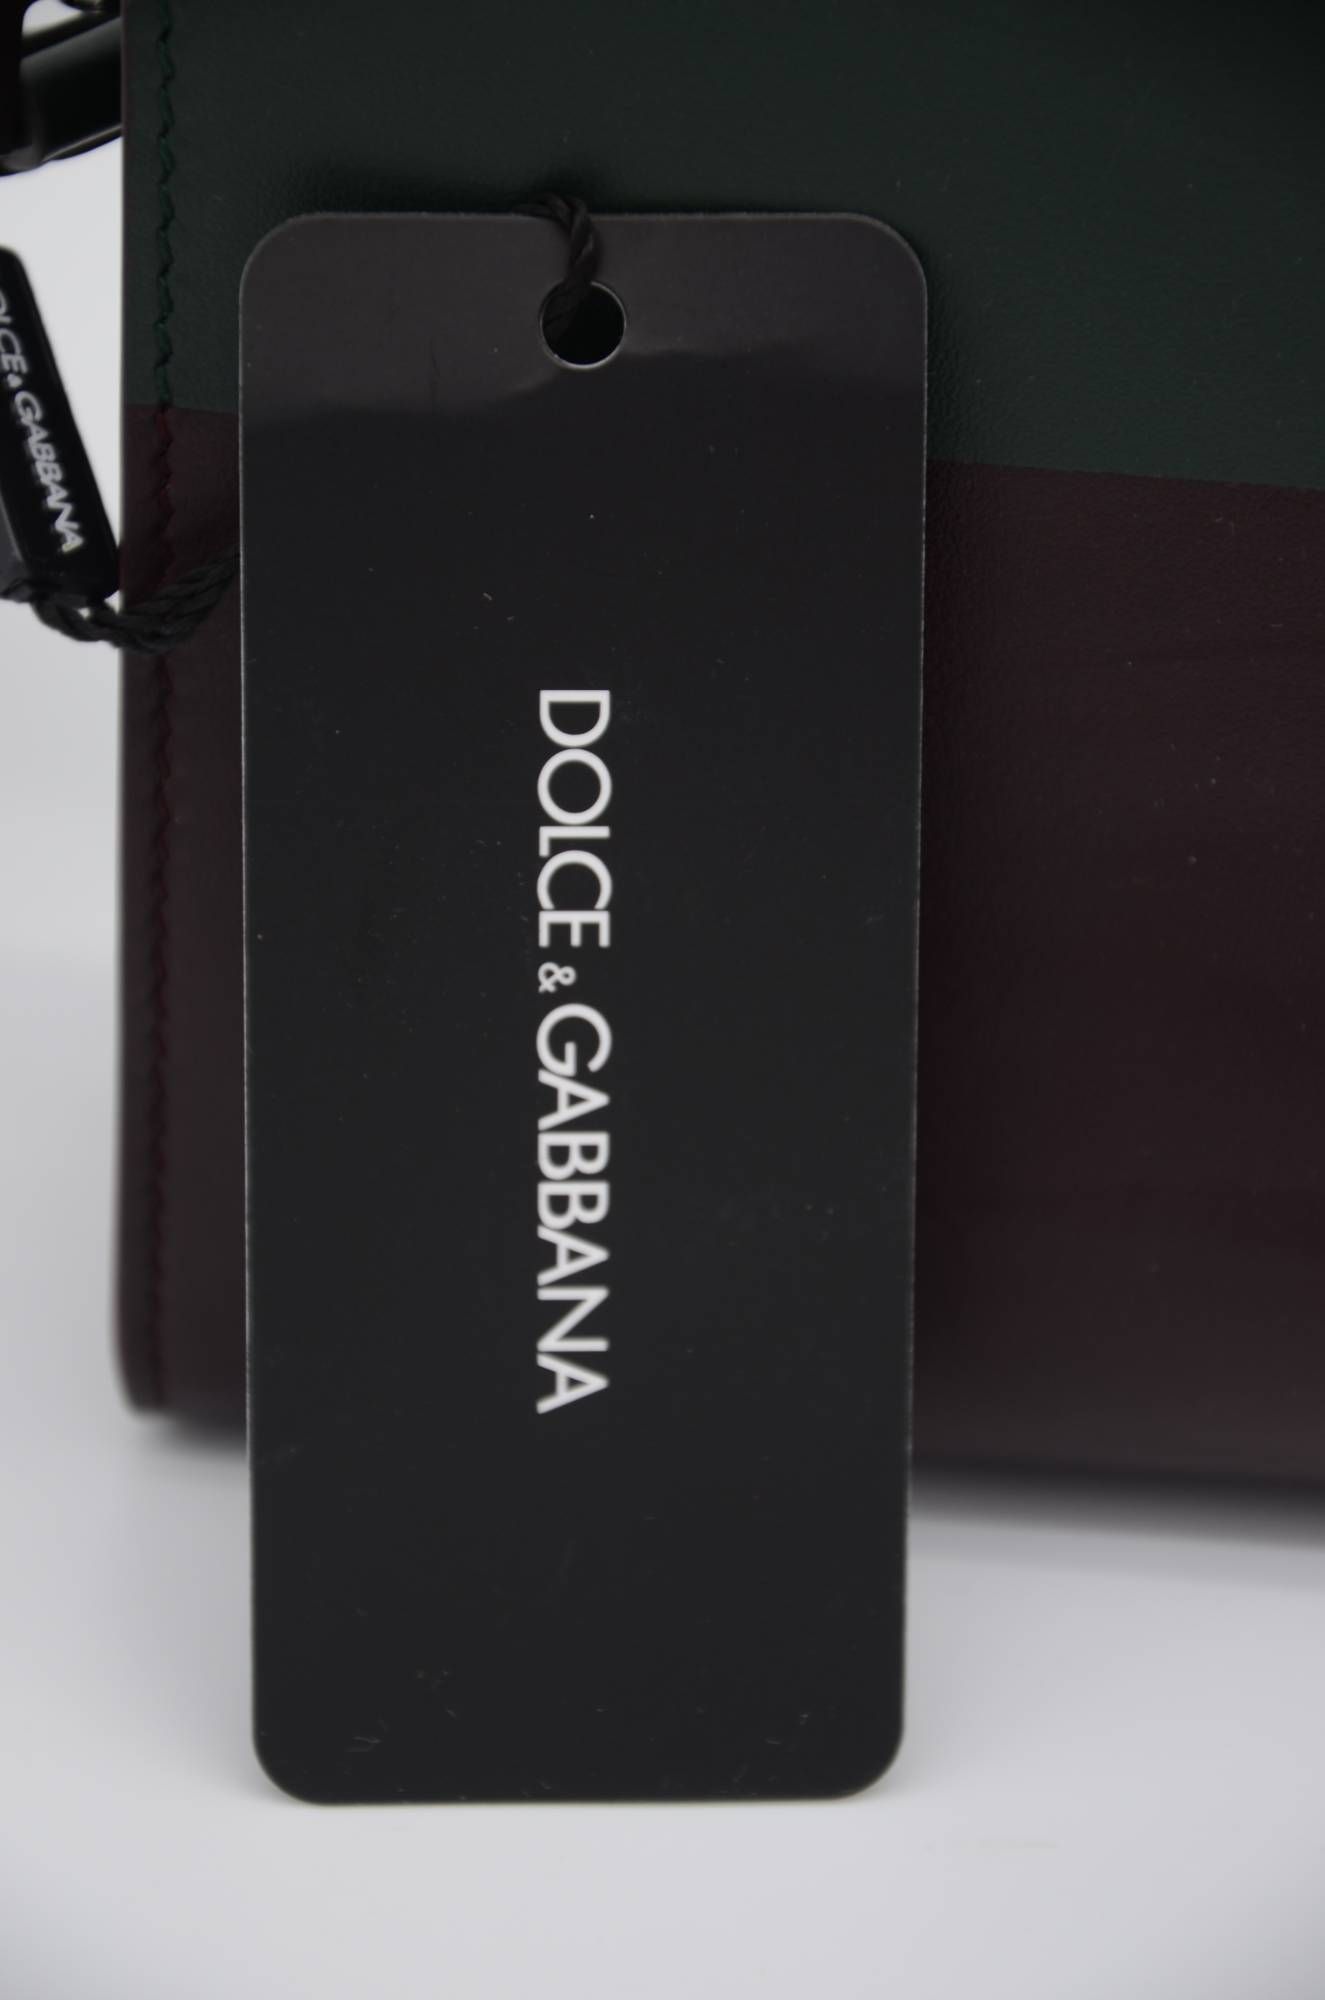 Dolce & Gabbana Men Leather Clutch Bag
With Dolce & Gabbana Logo
With Zipper
24 x 20 x 7 cm